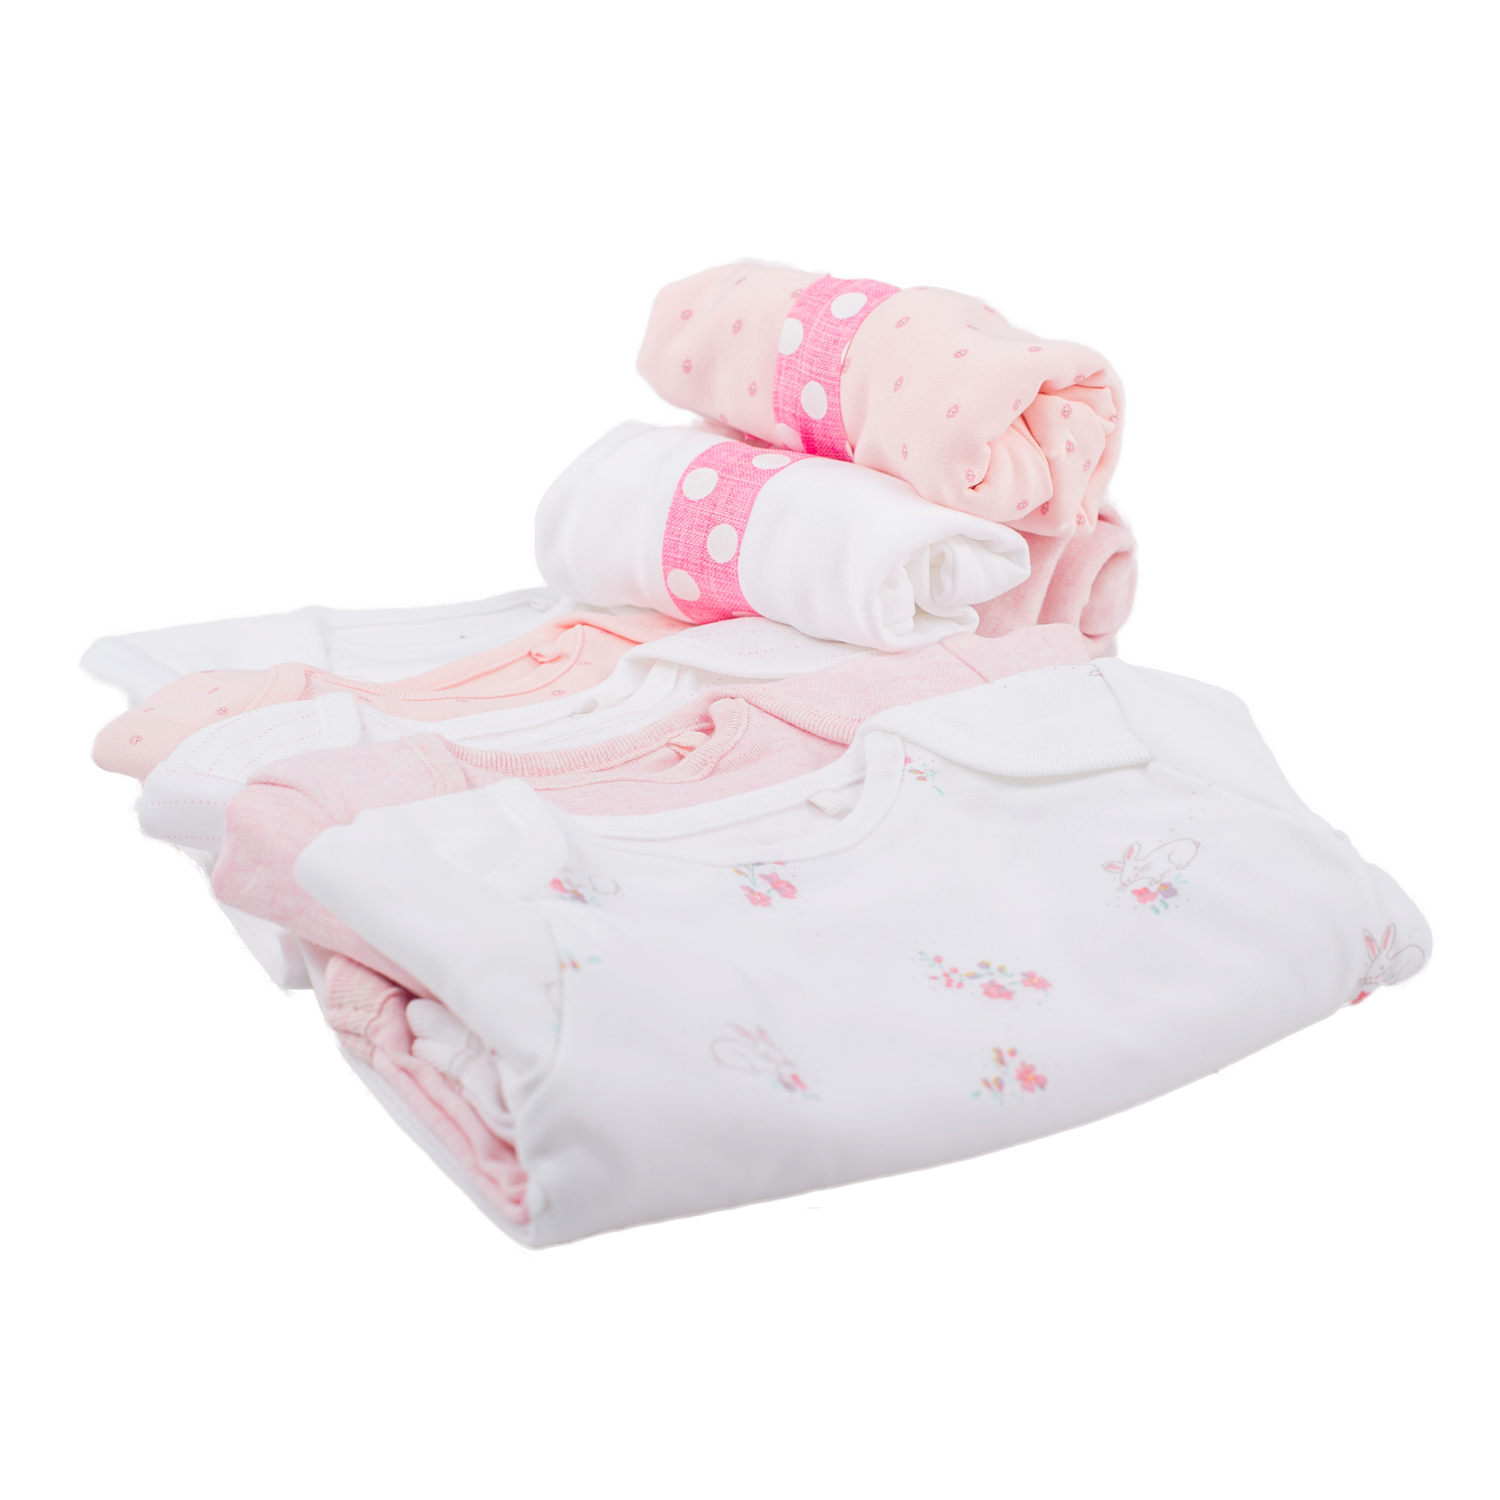 Pink Bodysuits x2 - Winter Gift Items & Supplies